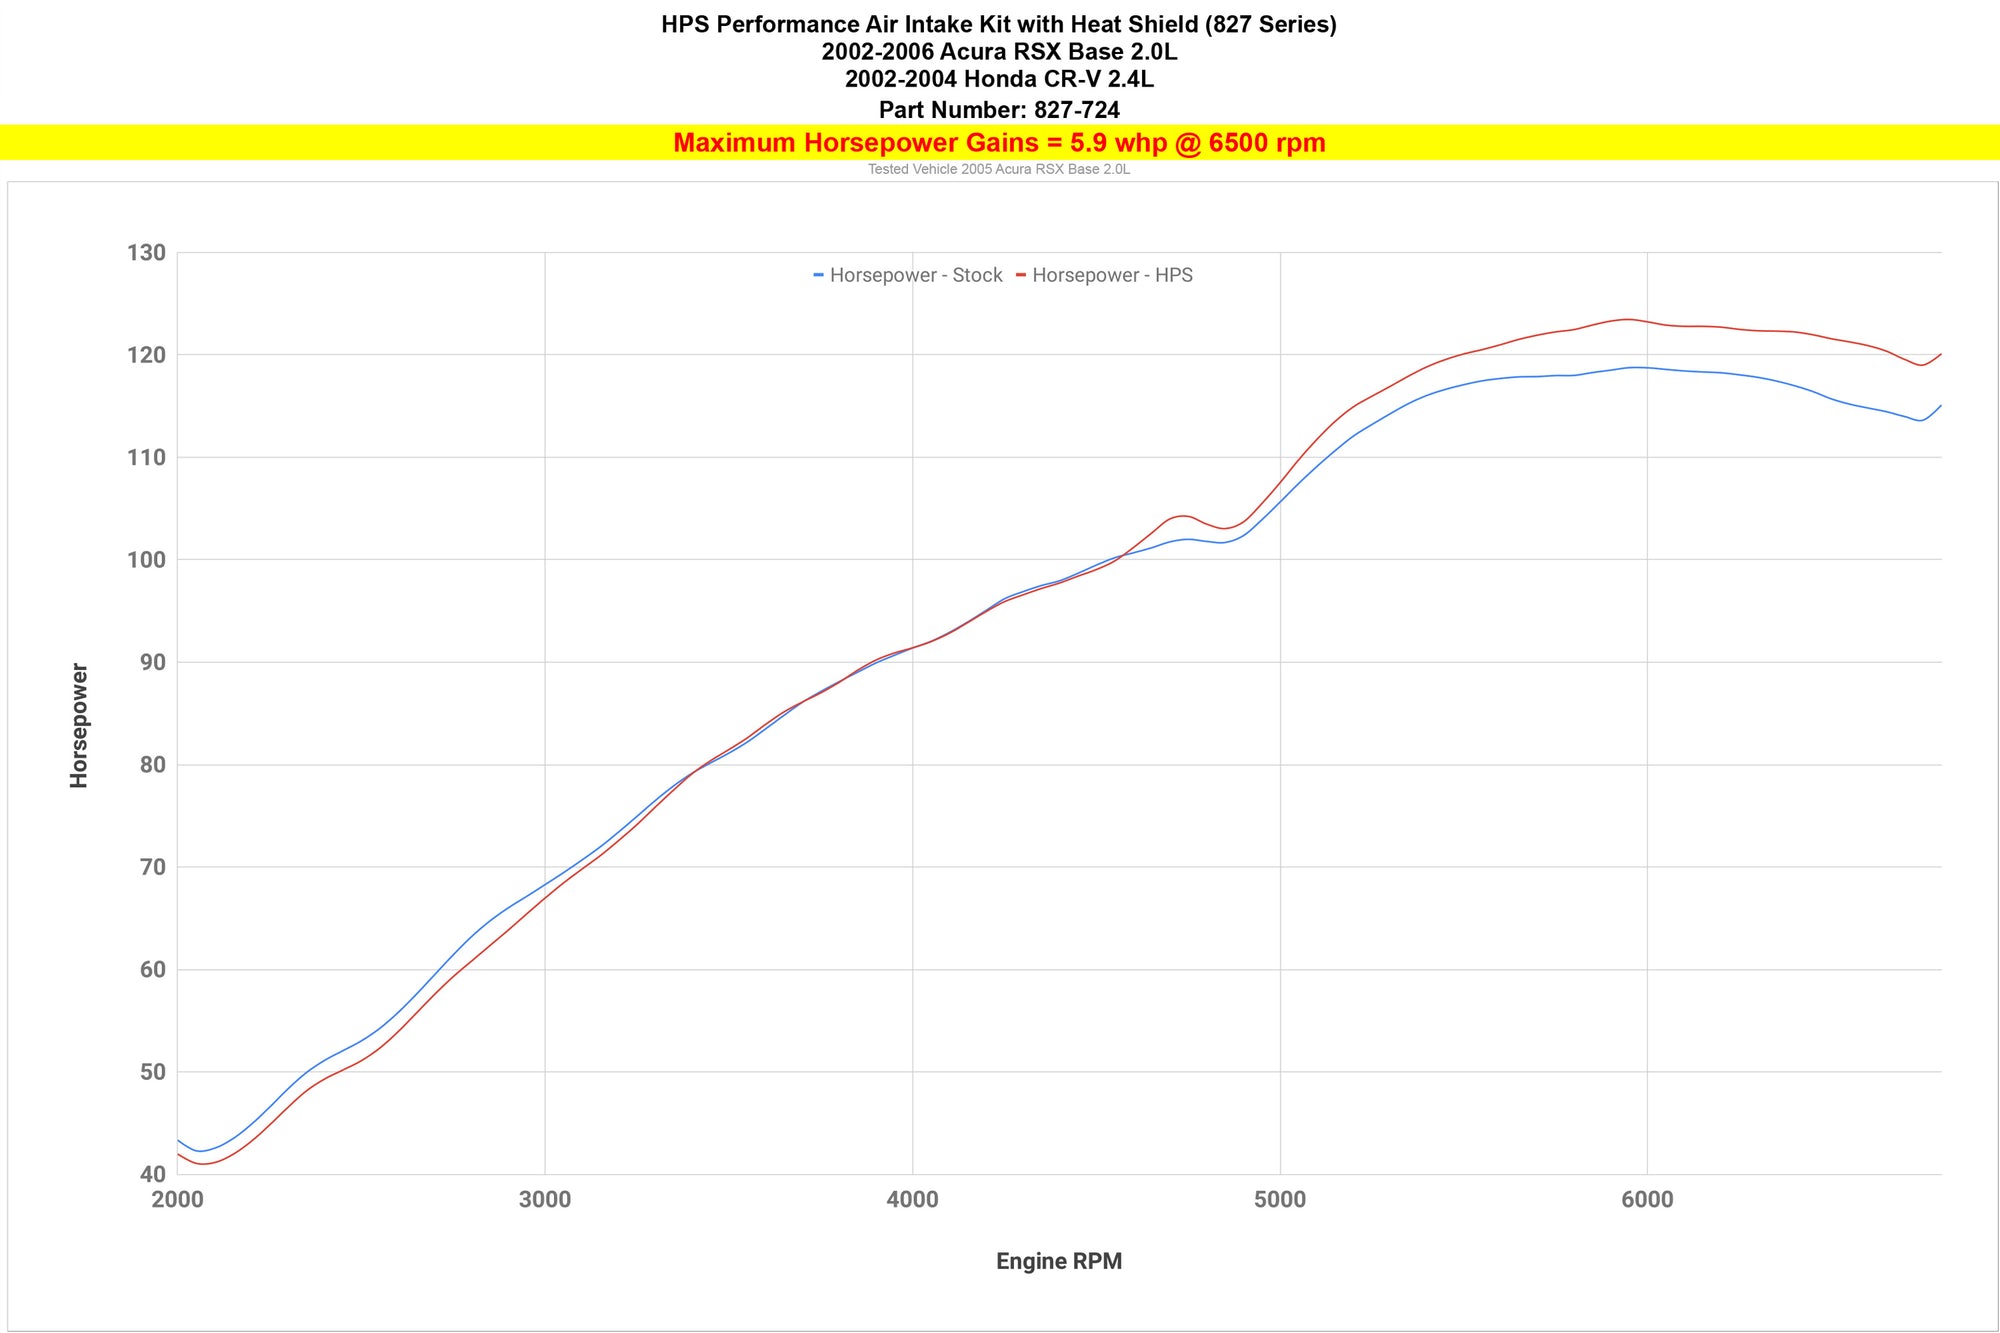 HPS Performance Air Intake Kit increase 5.9 horsepower performance gains Acura 2002-2006 RSX Base 2.0L 827-724